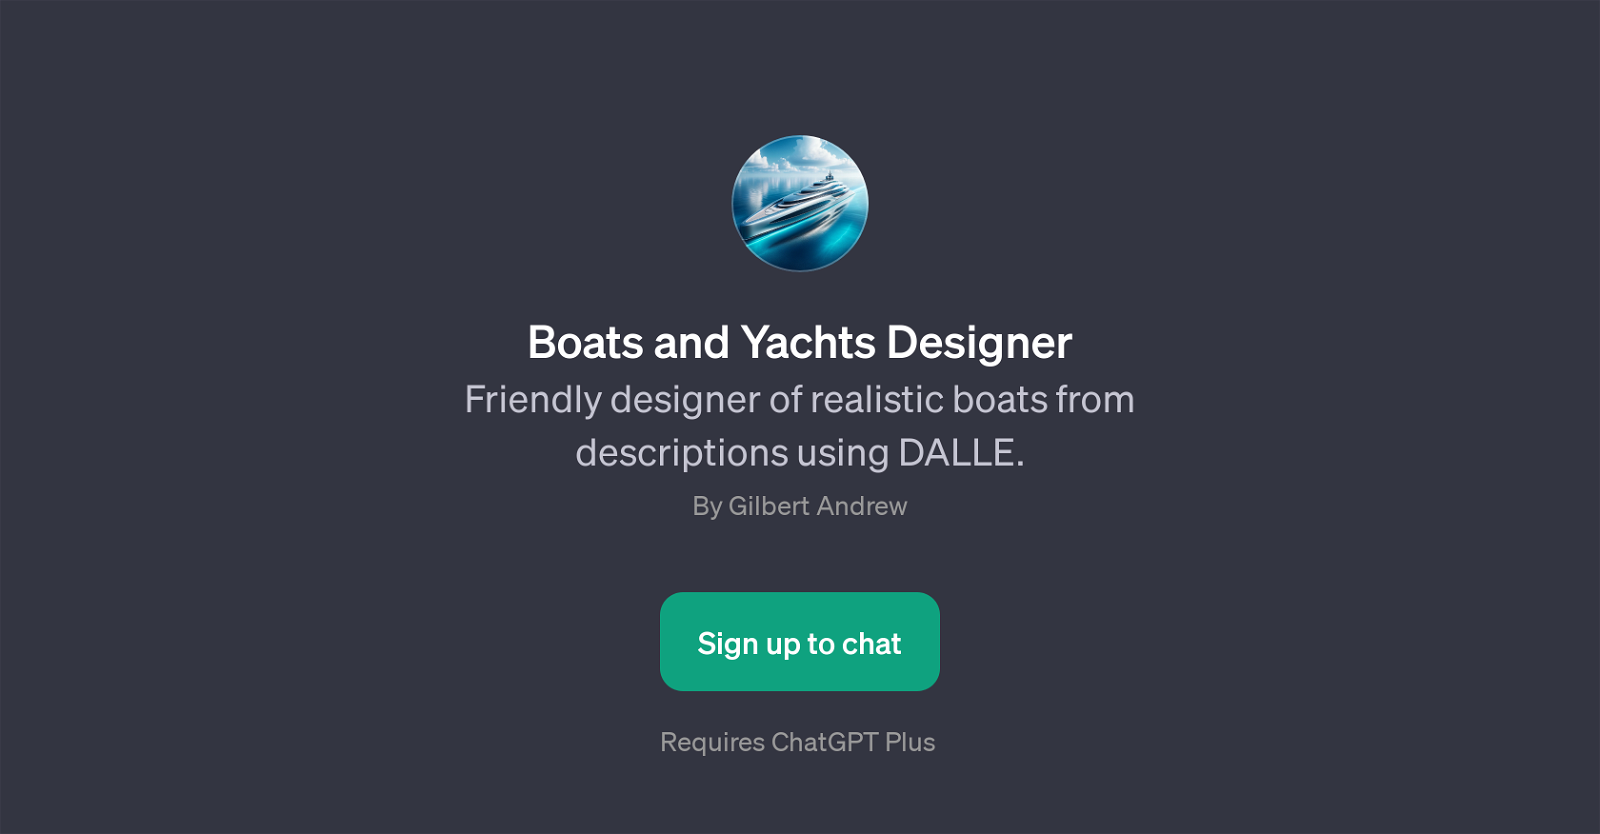 Boats and Yachts Designer website